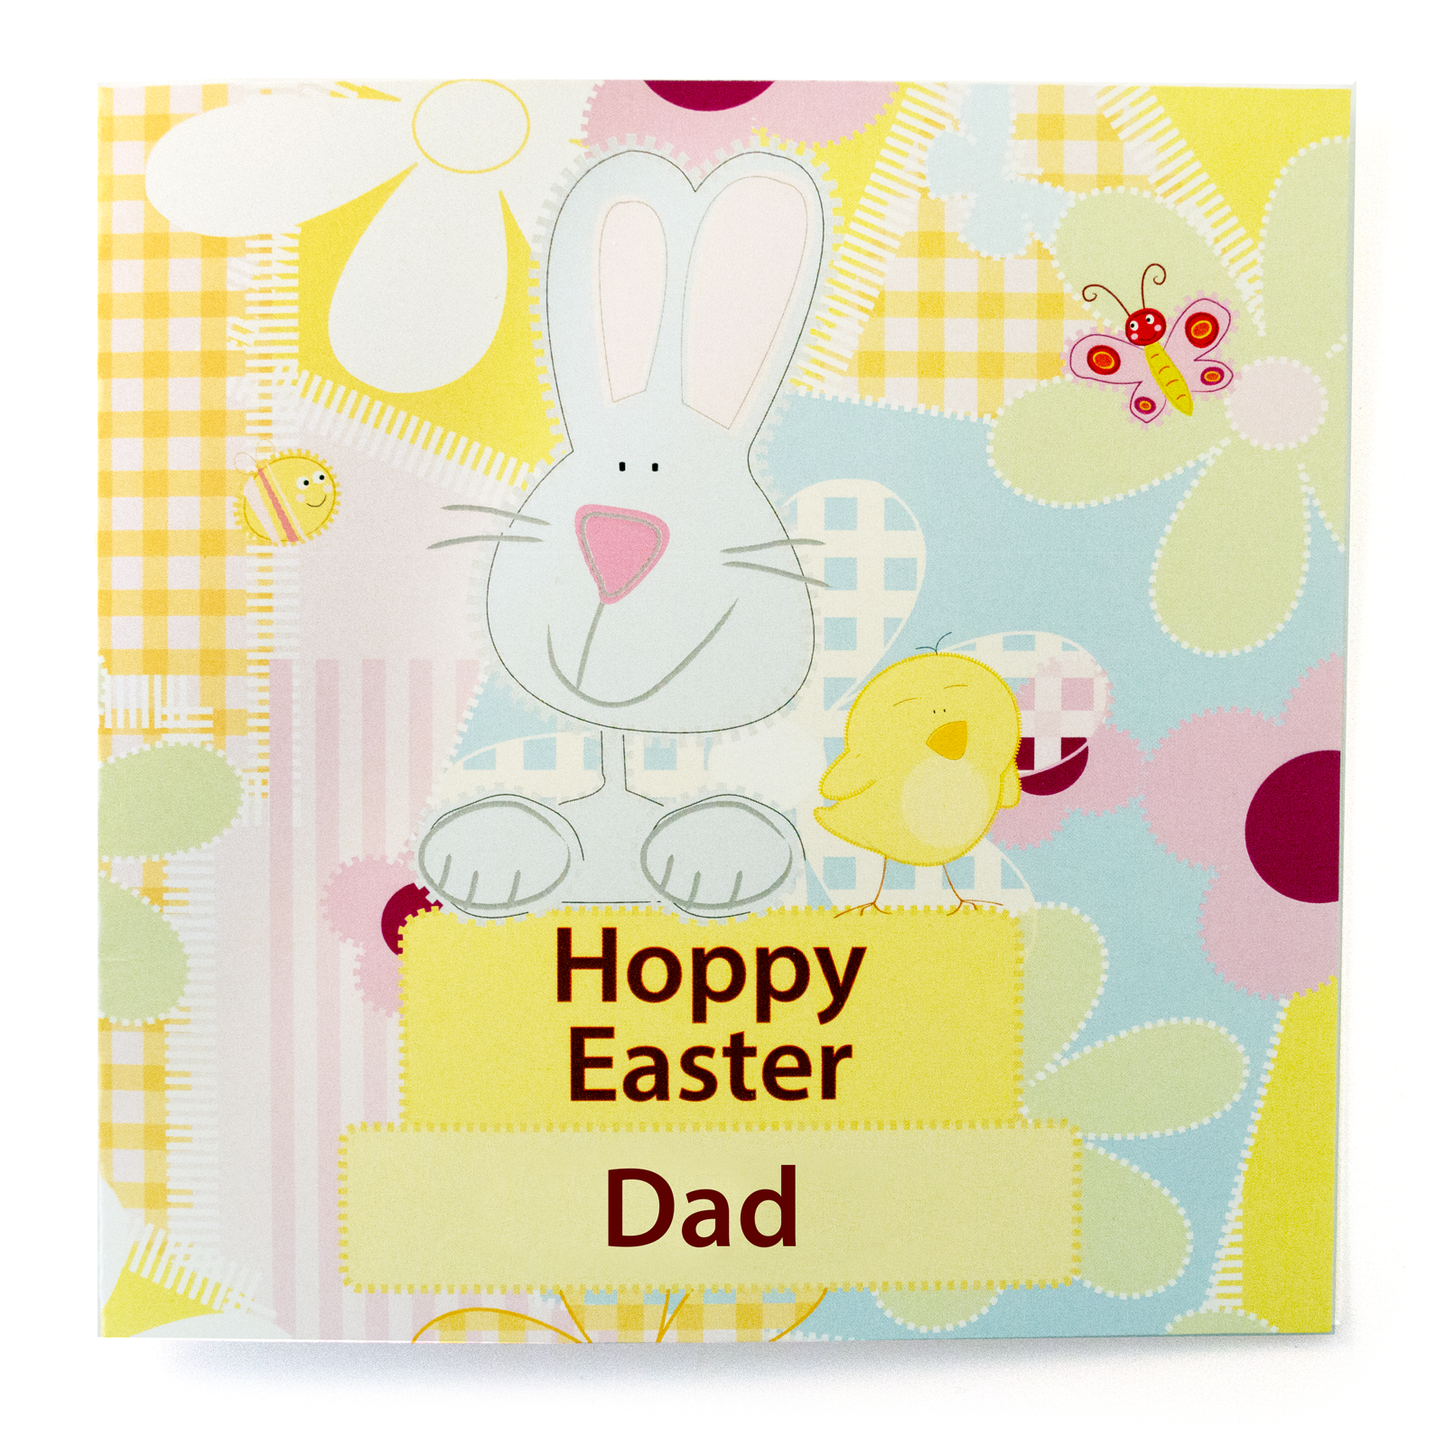 Hoppy Easter Dad Card